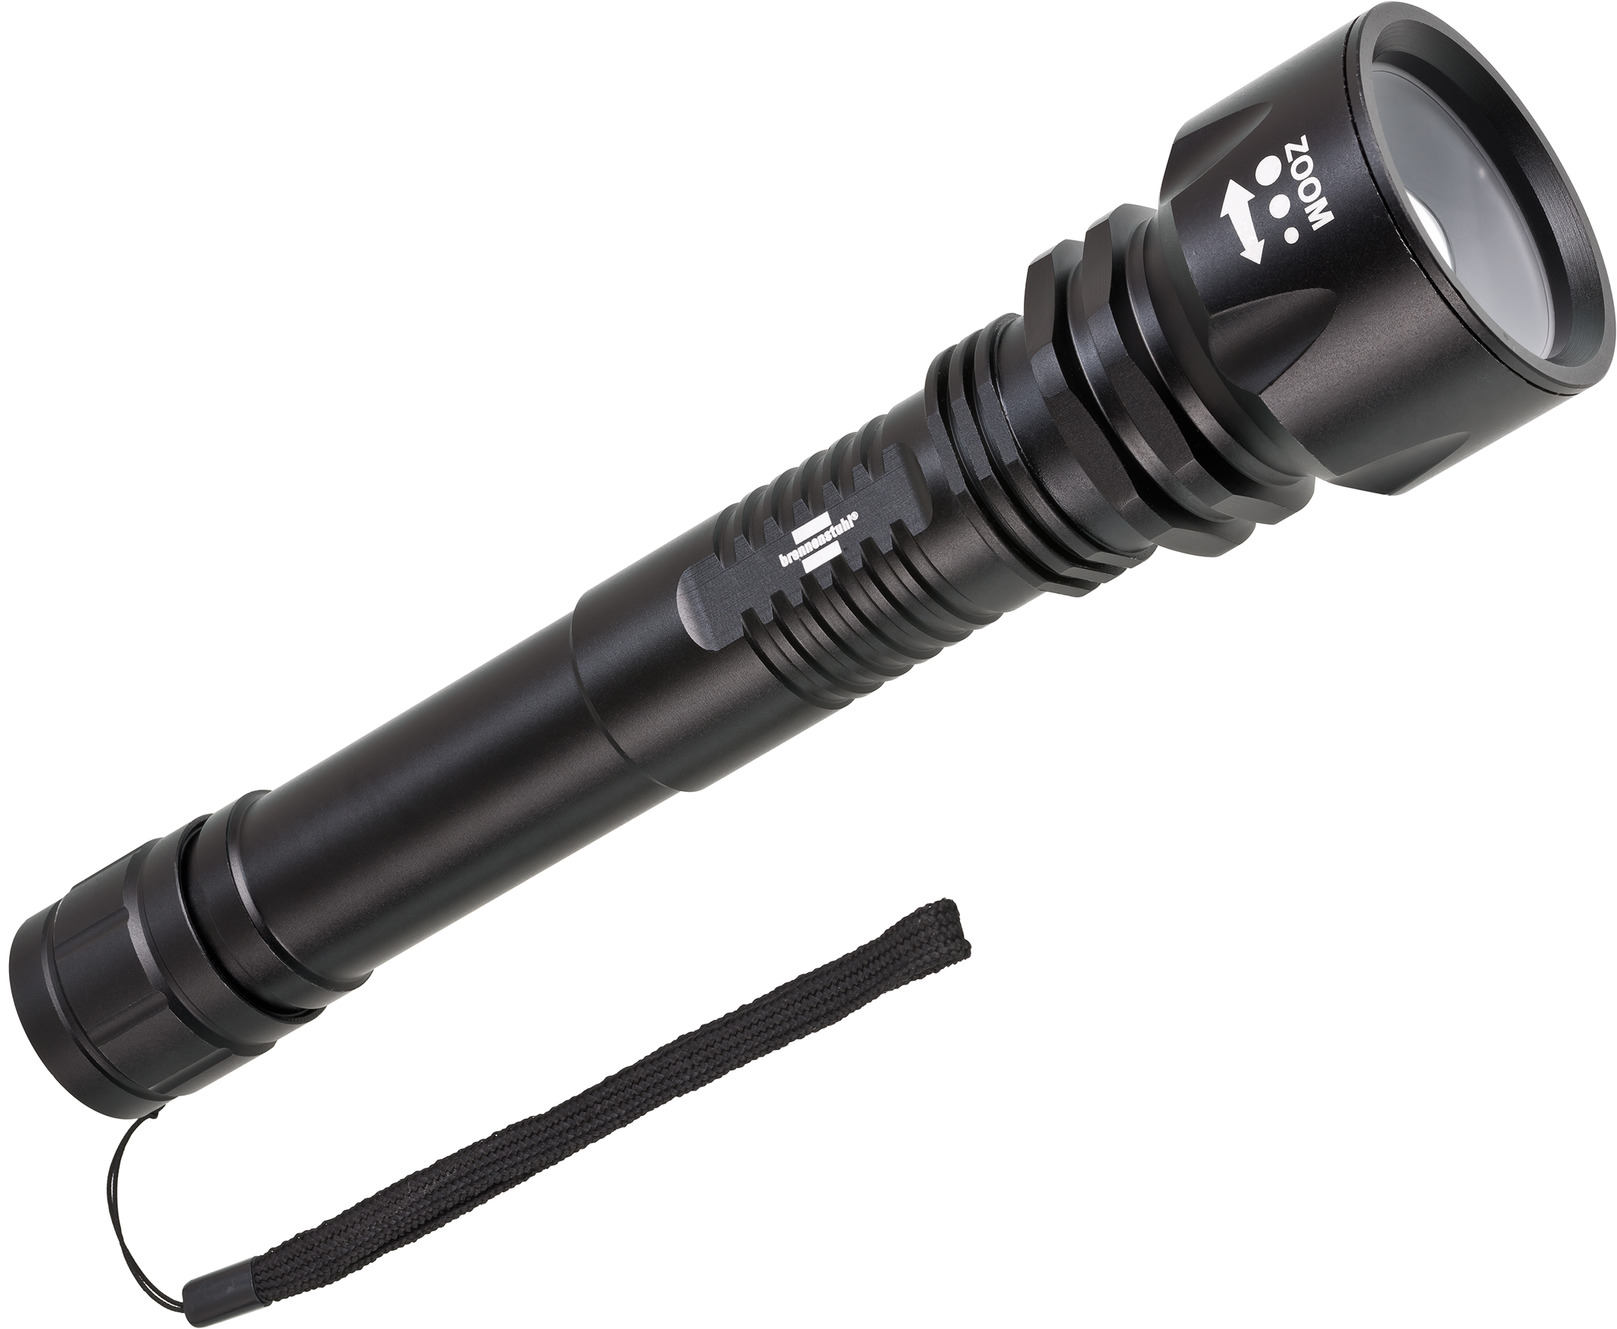 LuxPremium Rechargeable-Focus-LED-Flashlight 800 IP67, 860lm brennenstuhl® AF, | TL CREE-LED